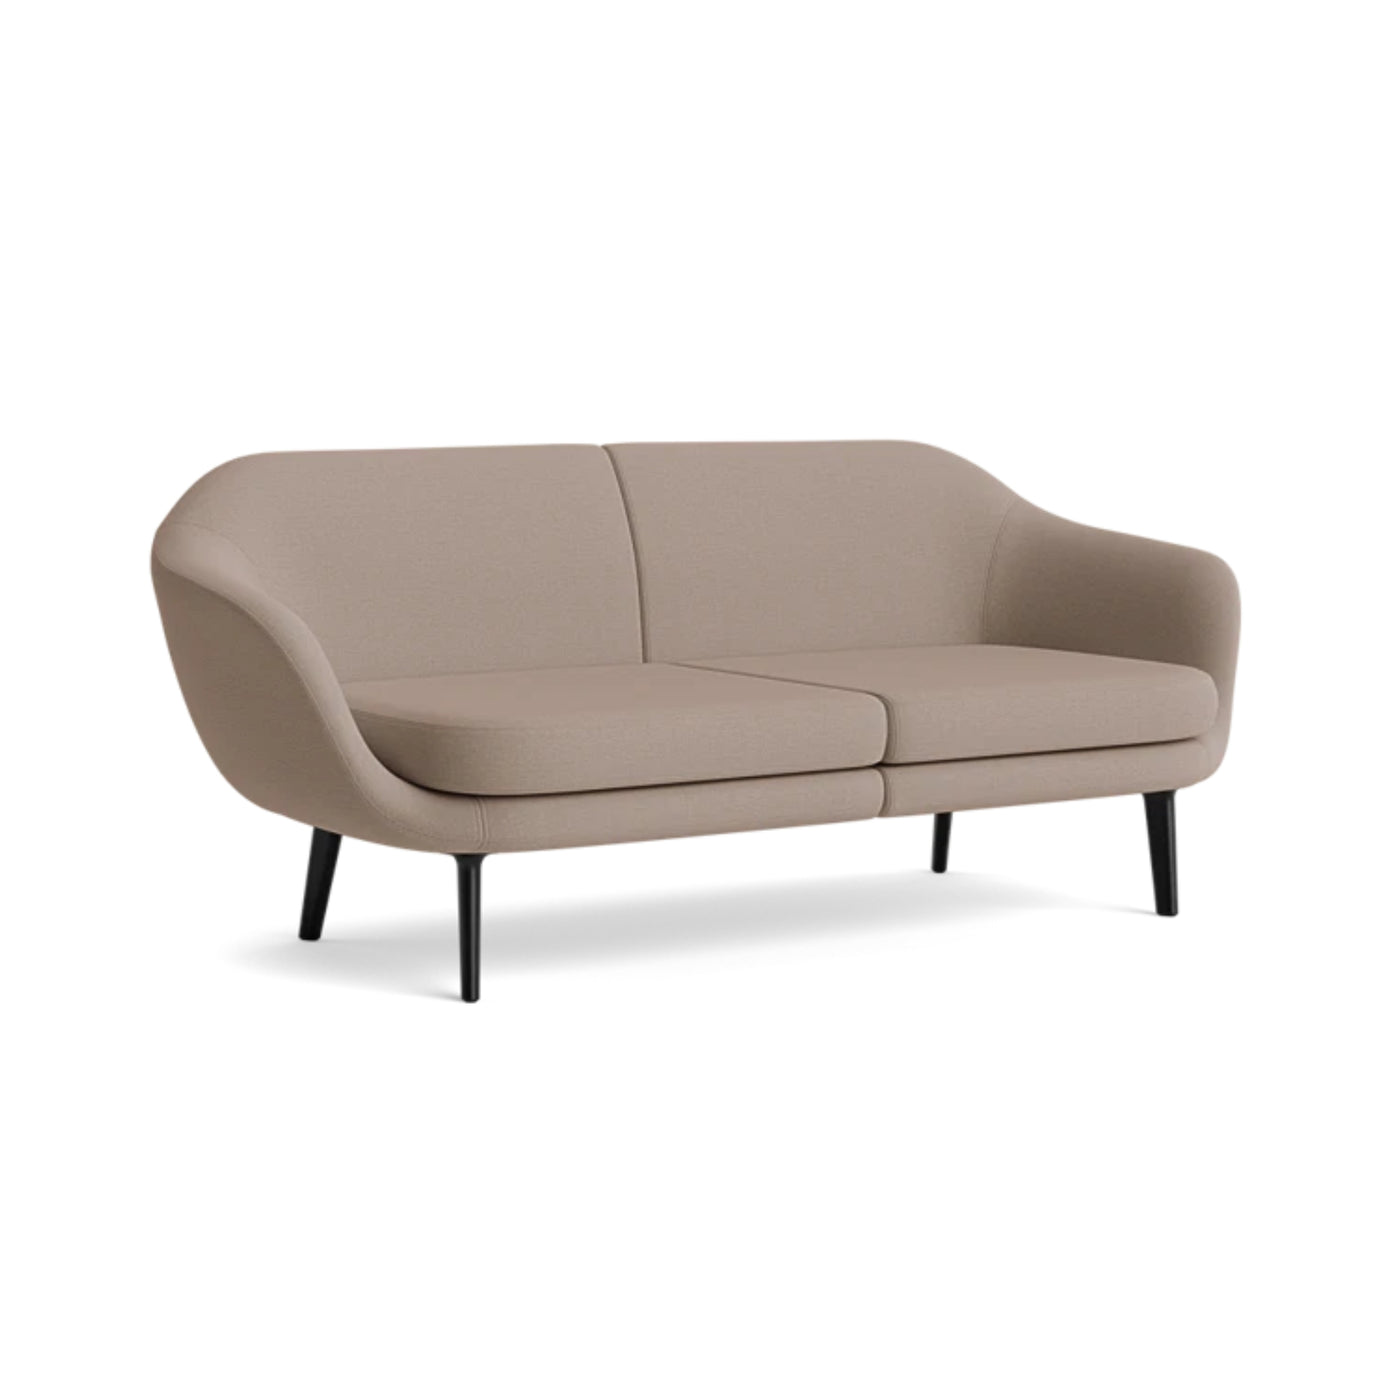 Normann Copenhagen Sum Modular 2 Seater Sofa. Made to order from someday designs. #colour_steelcut-trio-426